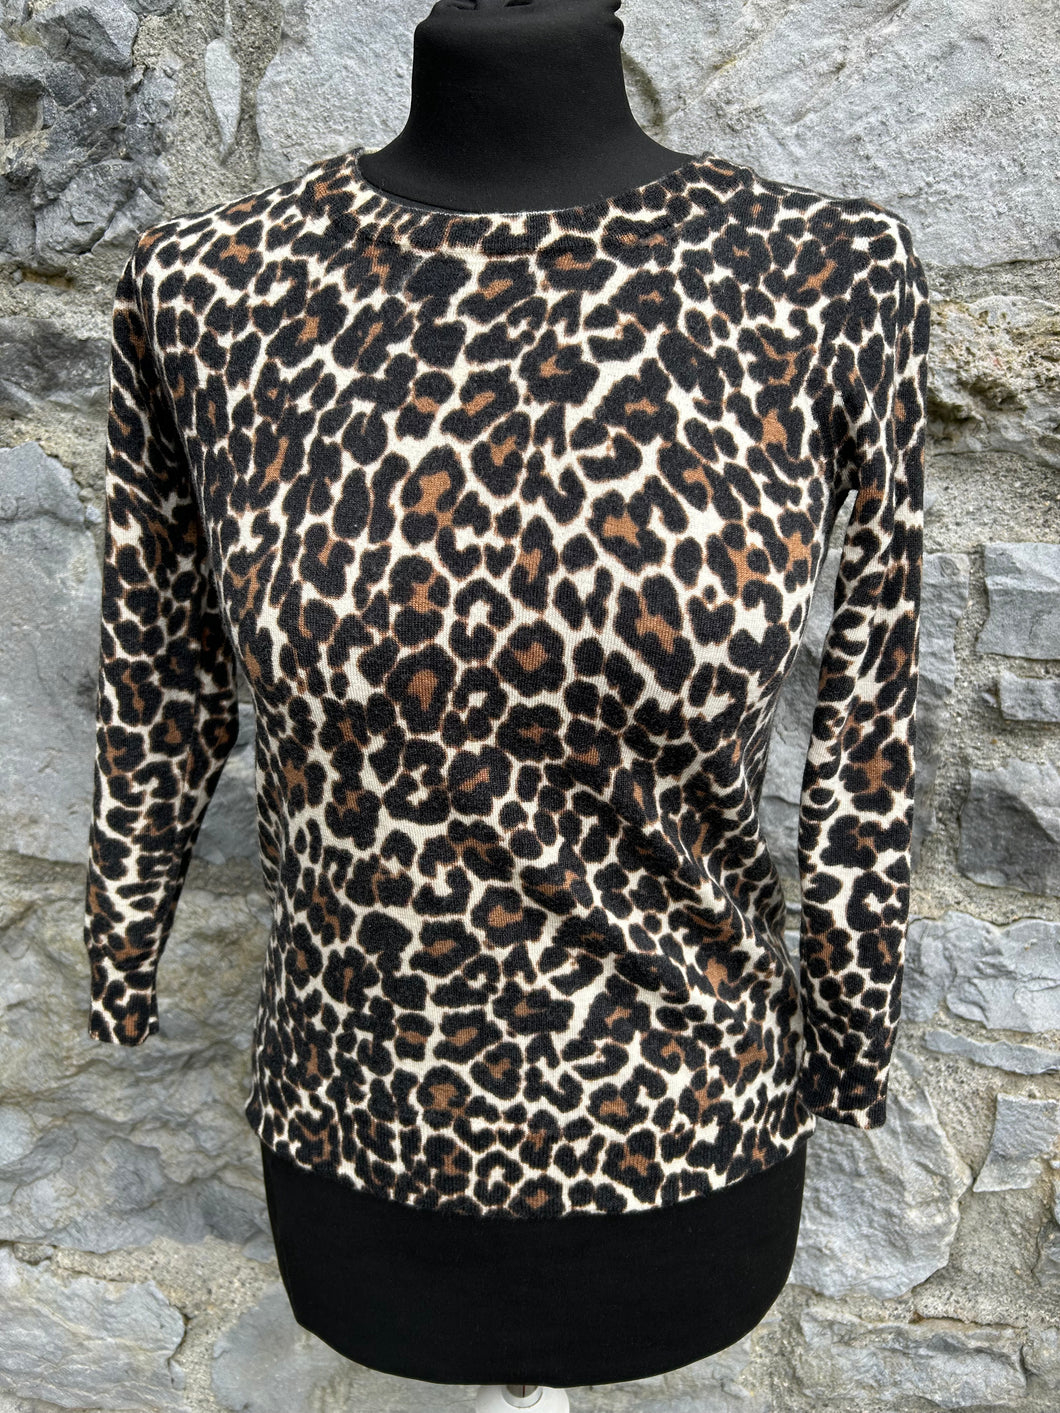 Leopard print merino wool top uk 6-8